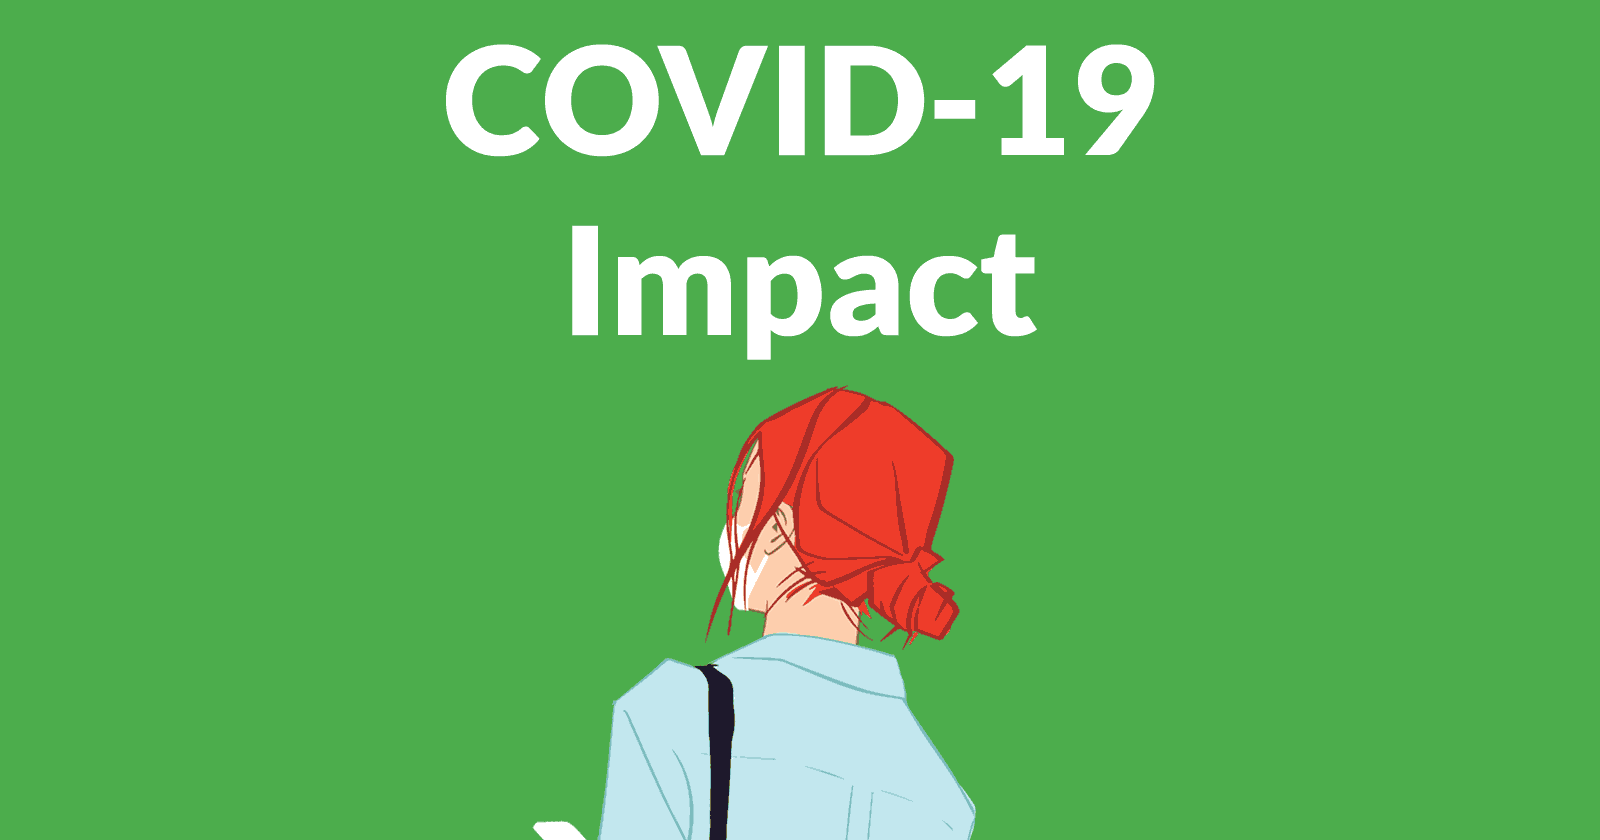 coronavirus covid-19 impact seo searc marketing